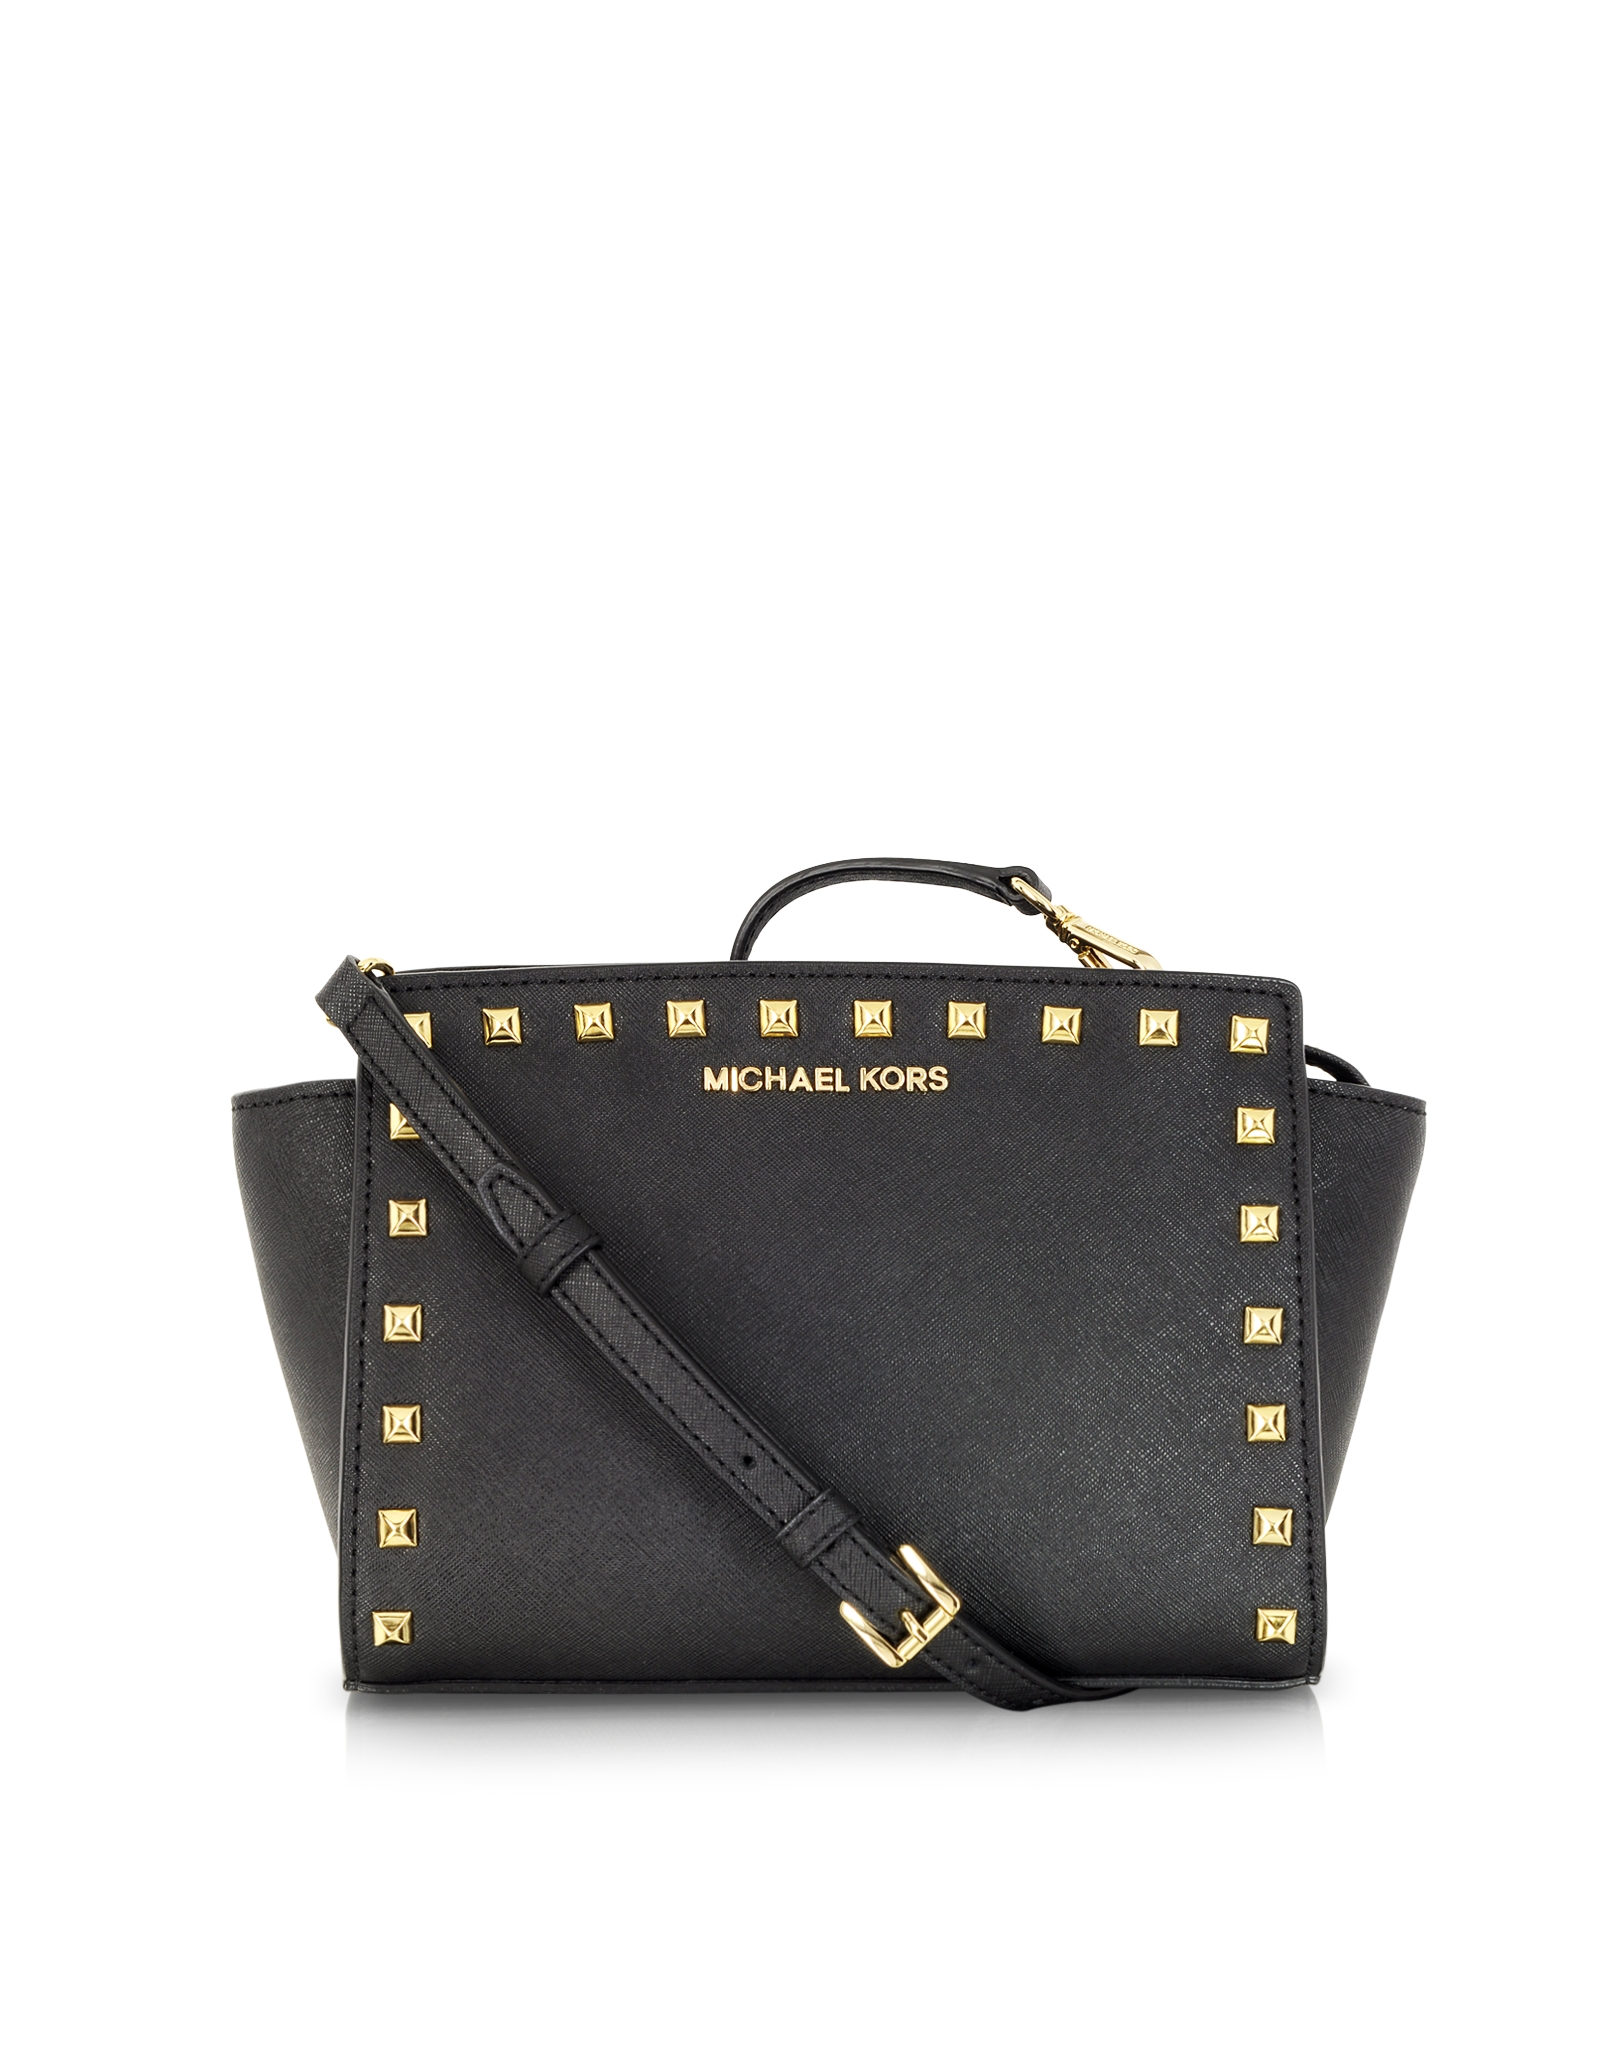 Michael kors Selma Studded Saffiano Leather Crossbody Bag in Black | Lyst